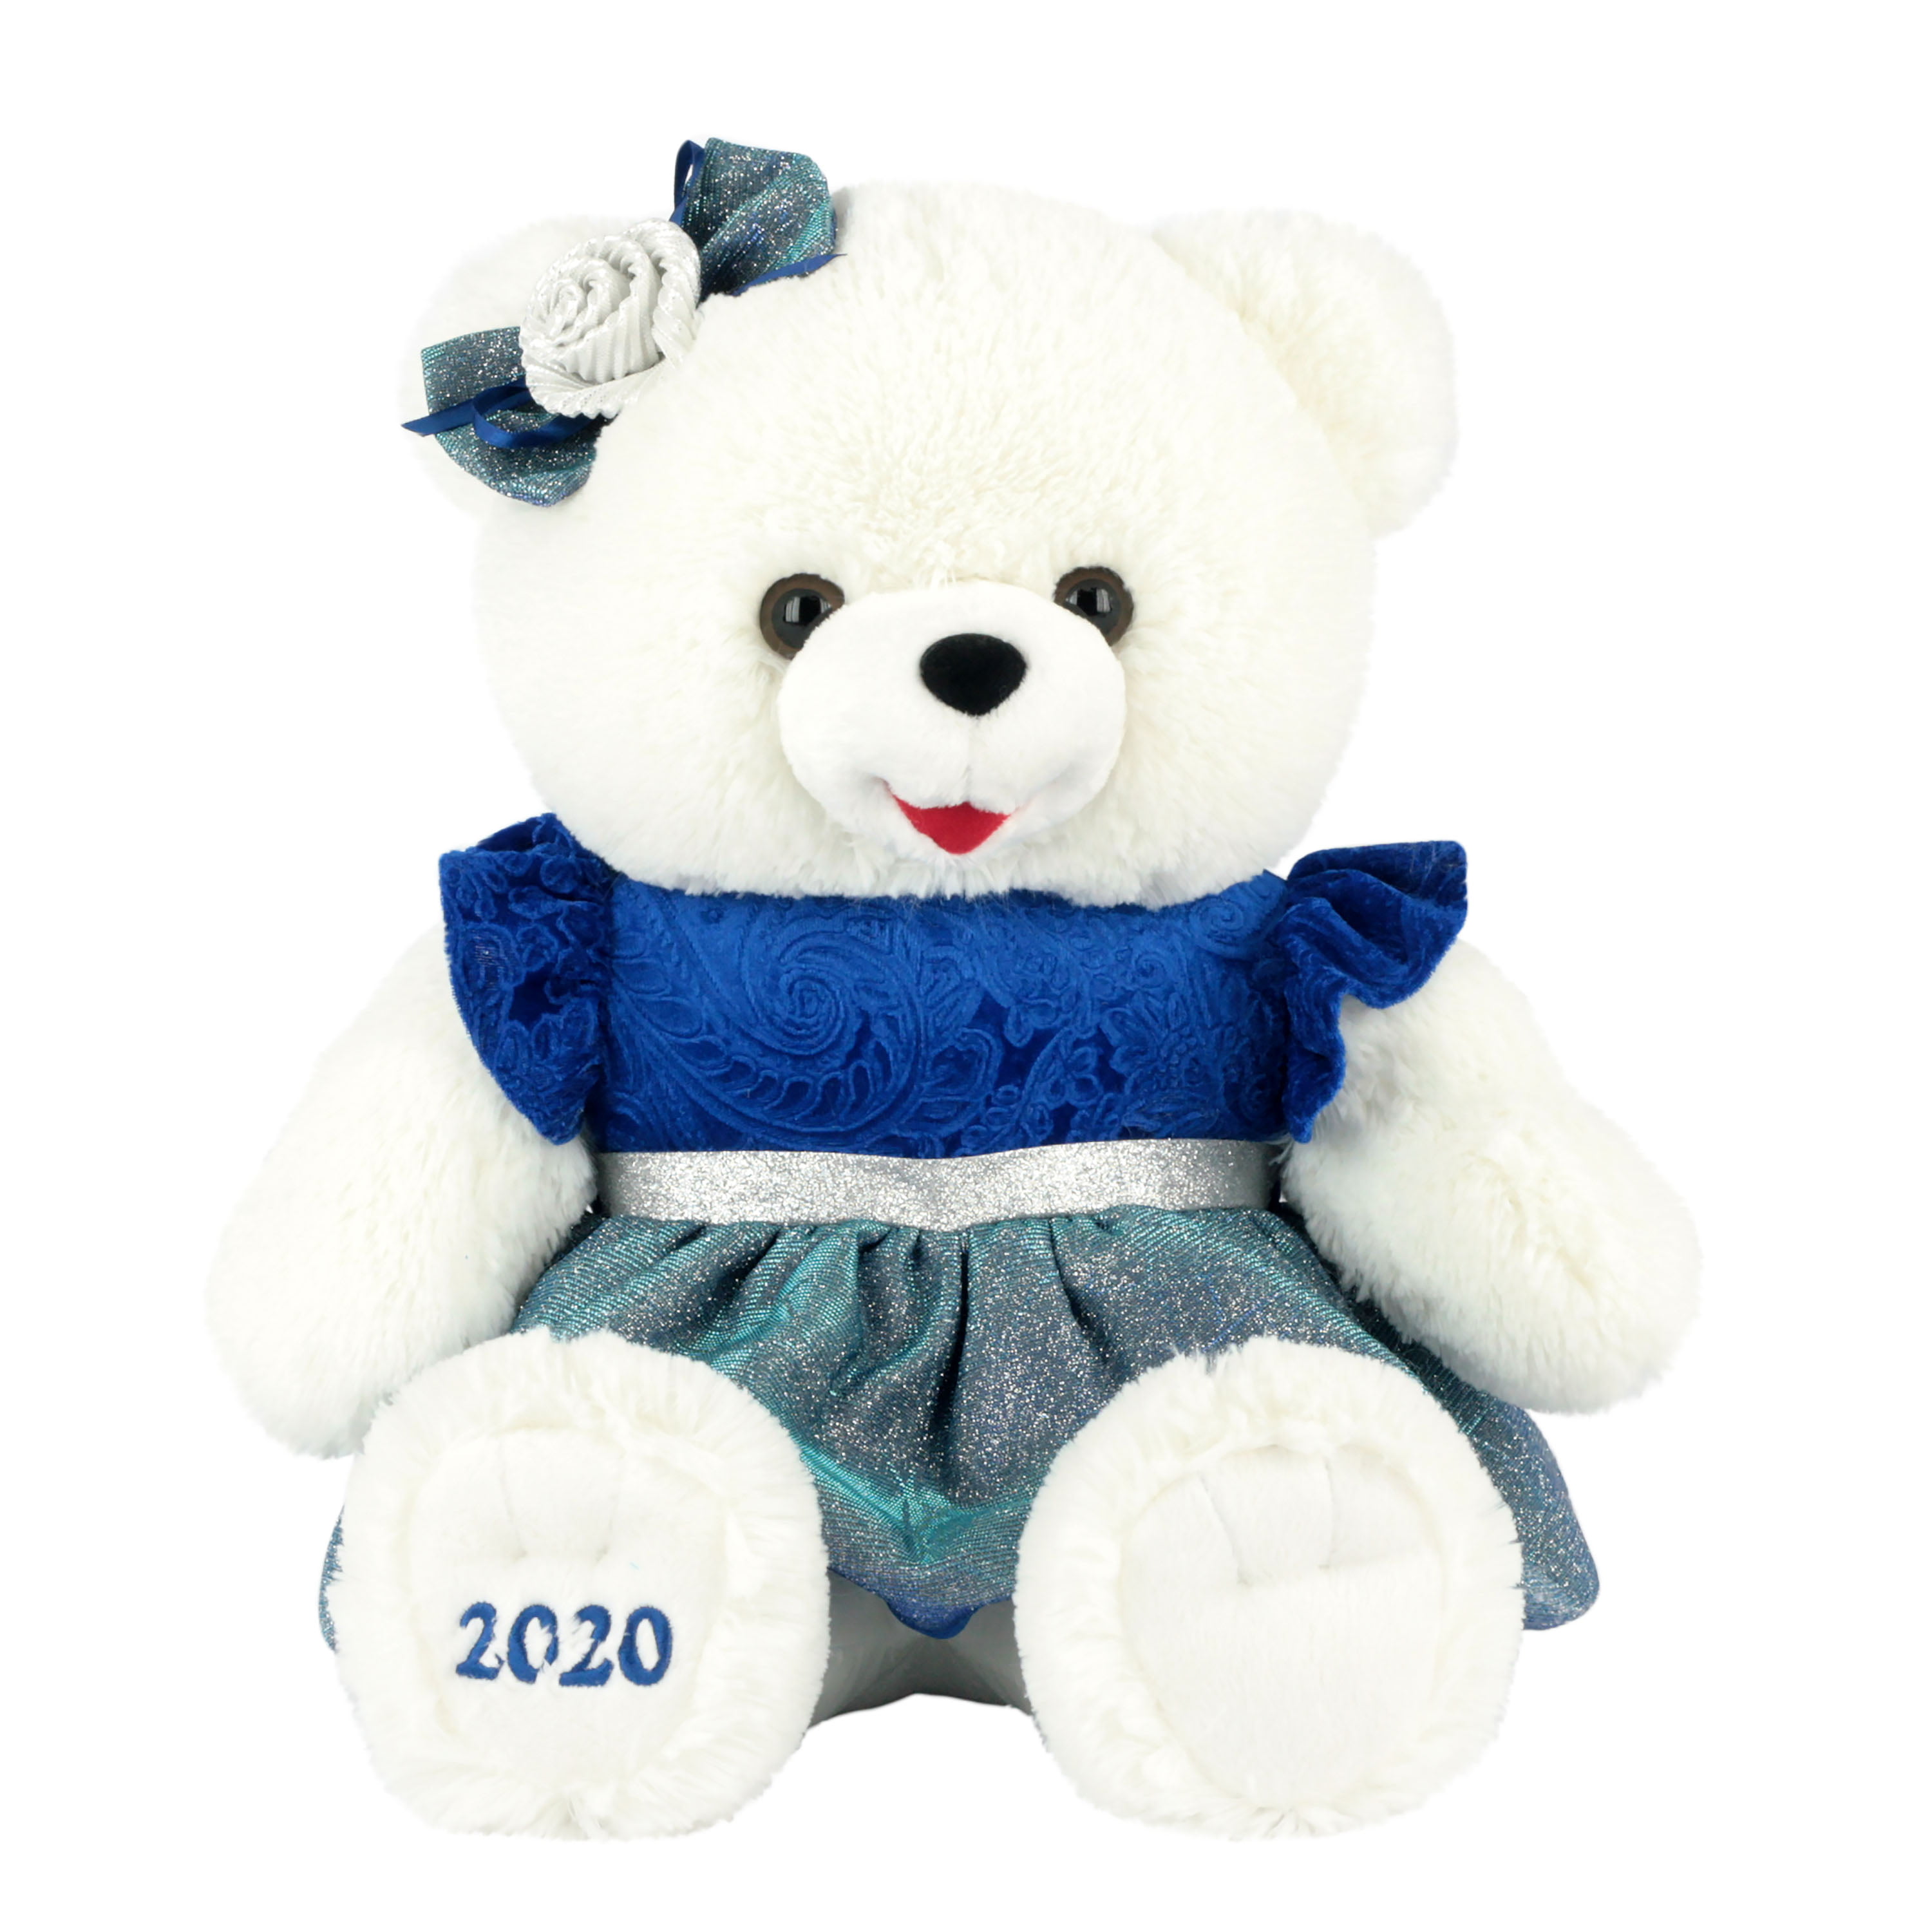 2 WalMART CHRISTMAS Snowflake TEDDY BEARs 2020 White Girl&Boy 13" Green outfit N 